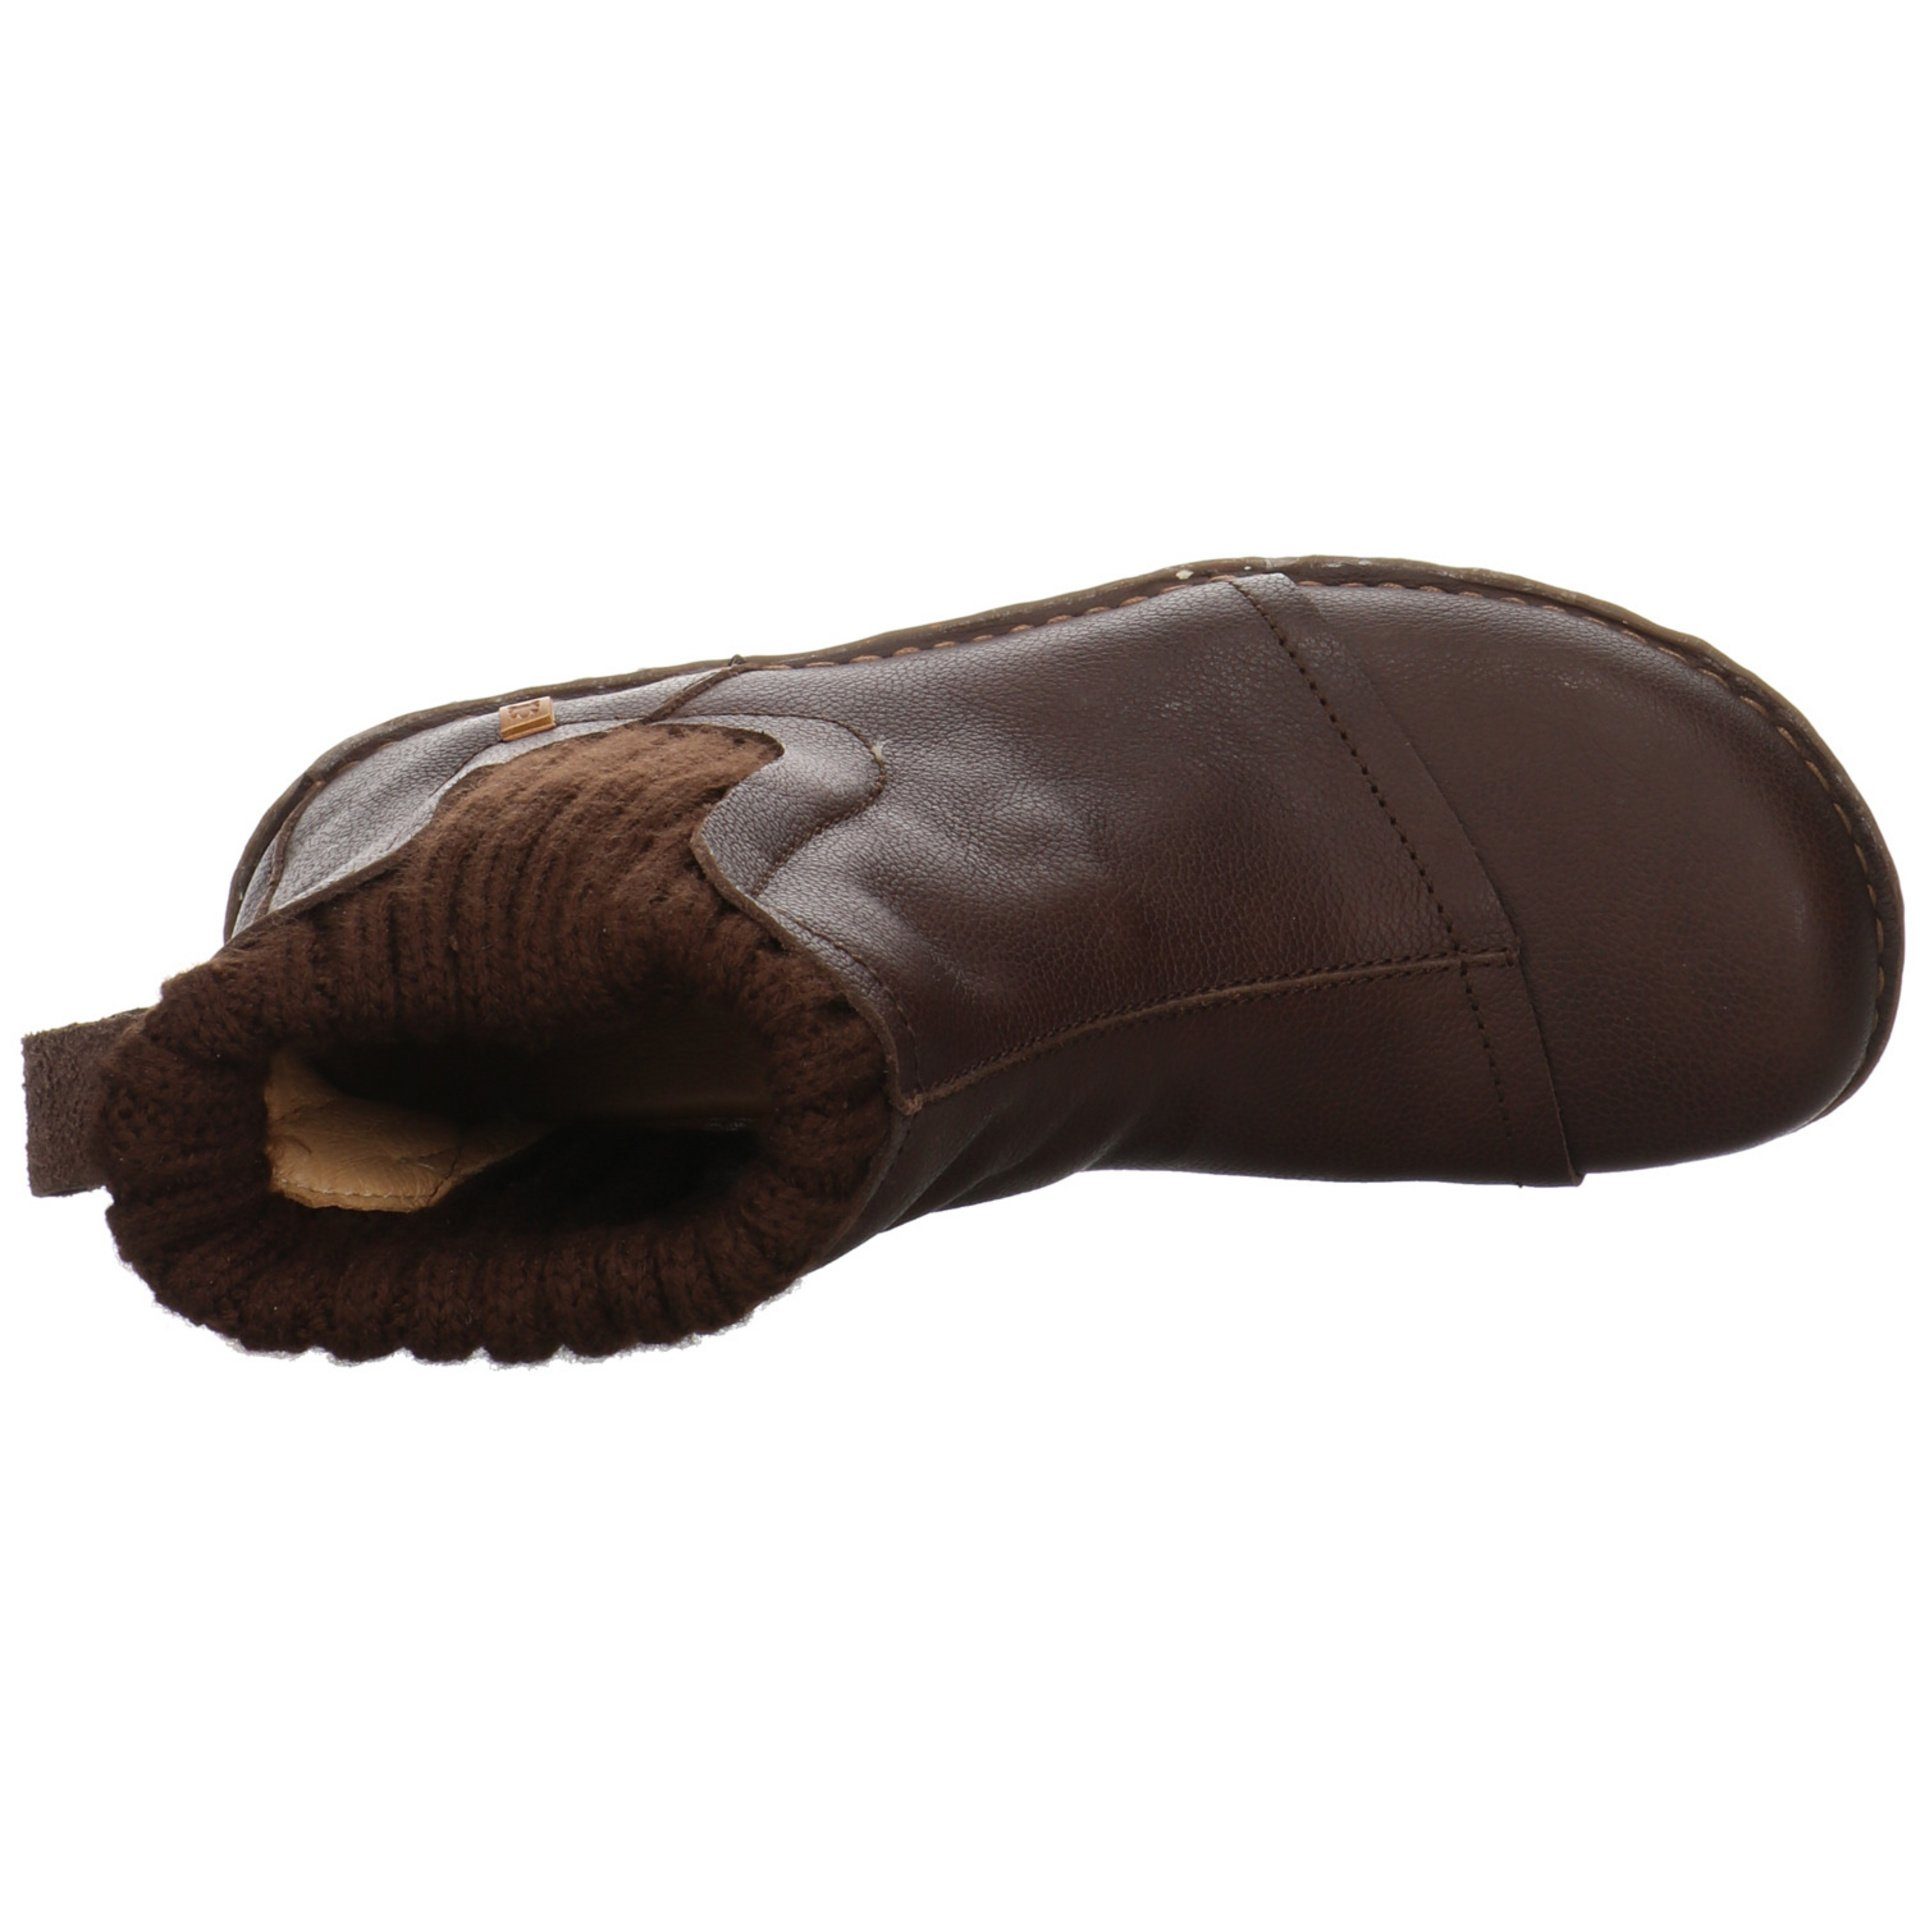 Yggdrasil Boots Glattleder Stiefel El Stiefel Damen Naturalista brown Schuhe